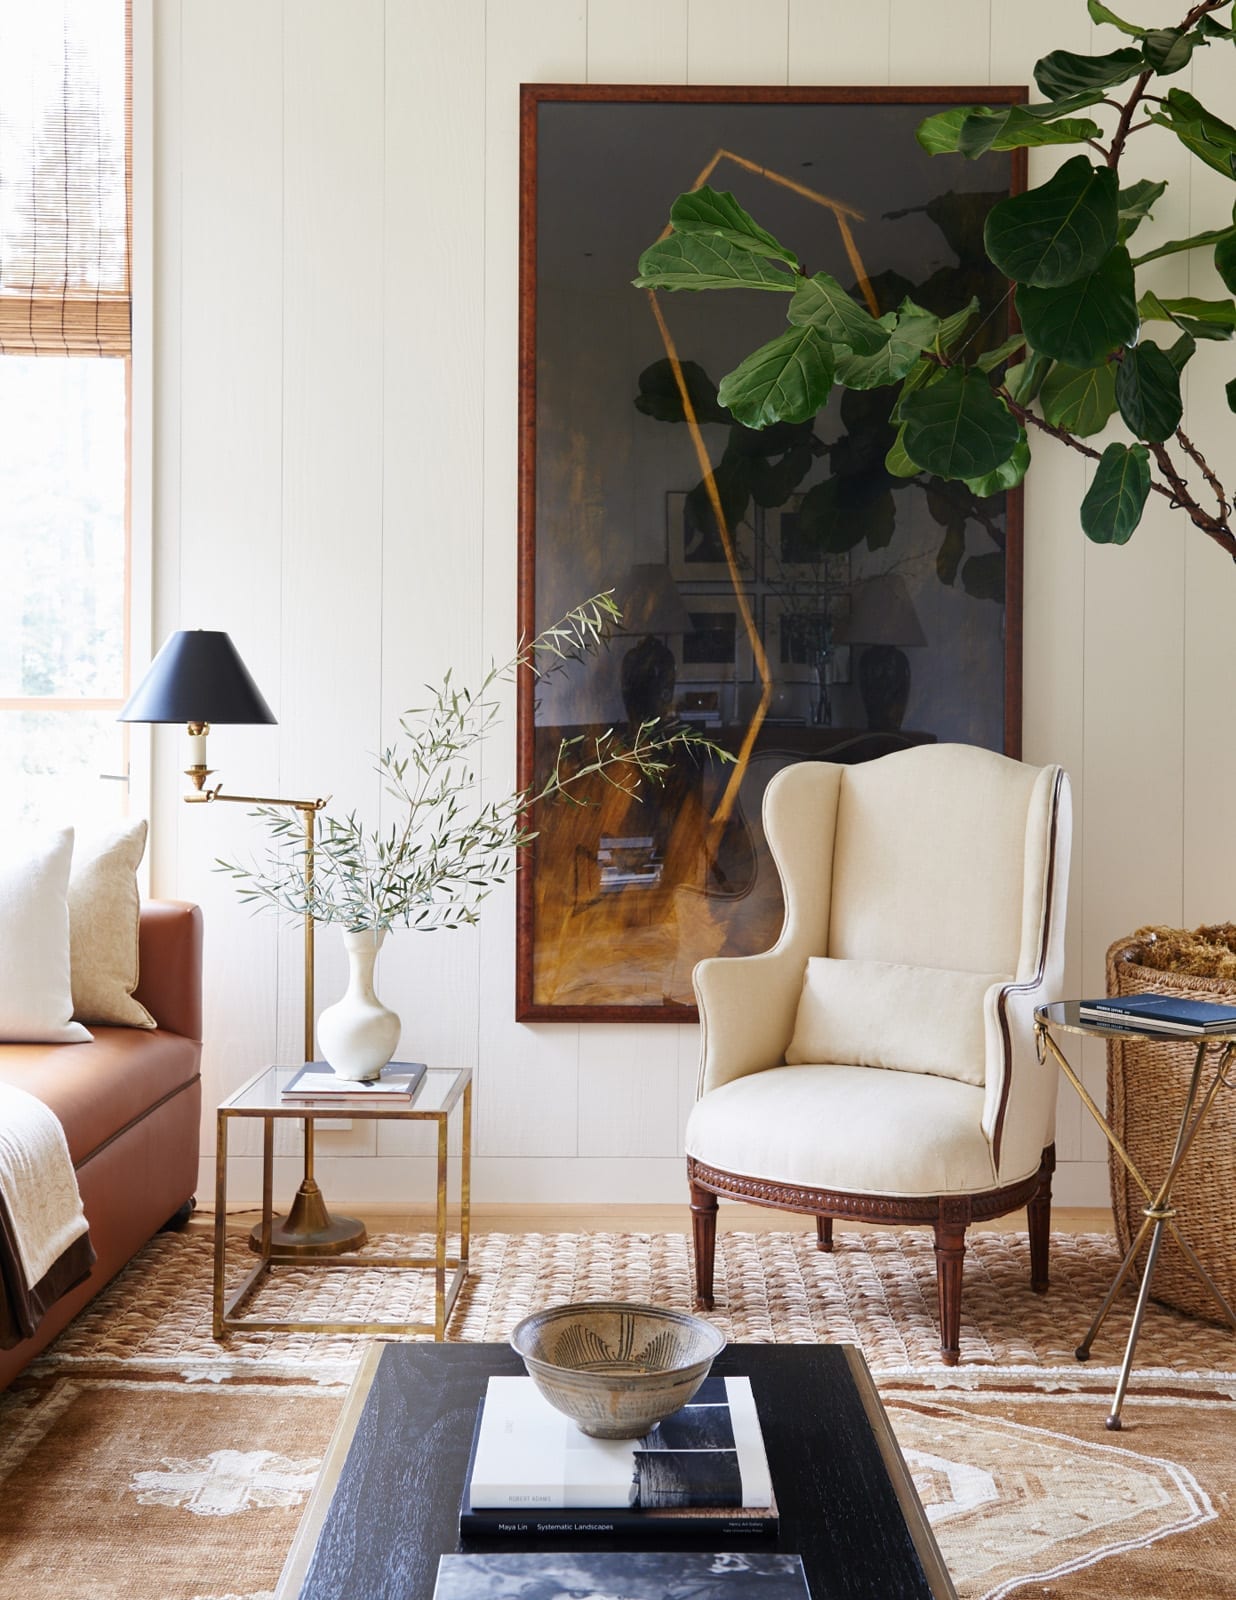 Easy Elegance in Marin County - Mark Sikes Design - Amy Neunsinger Photography - living room - living room design - living room decor - living room inspo